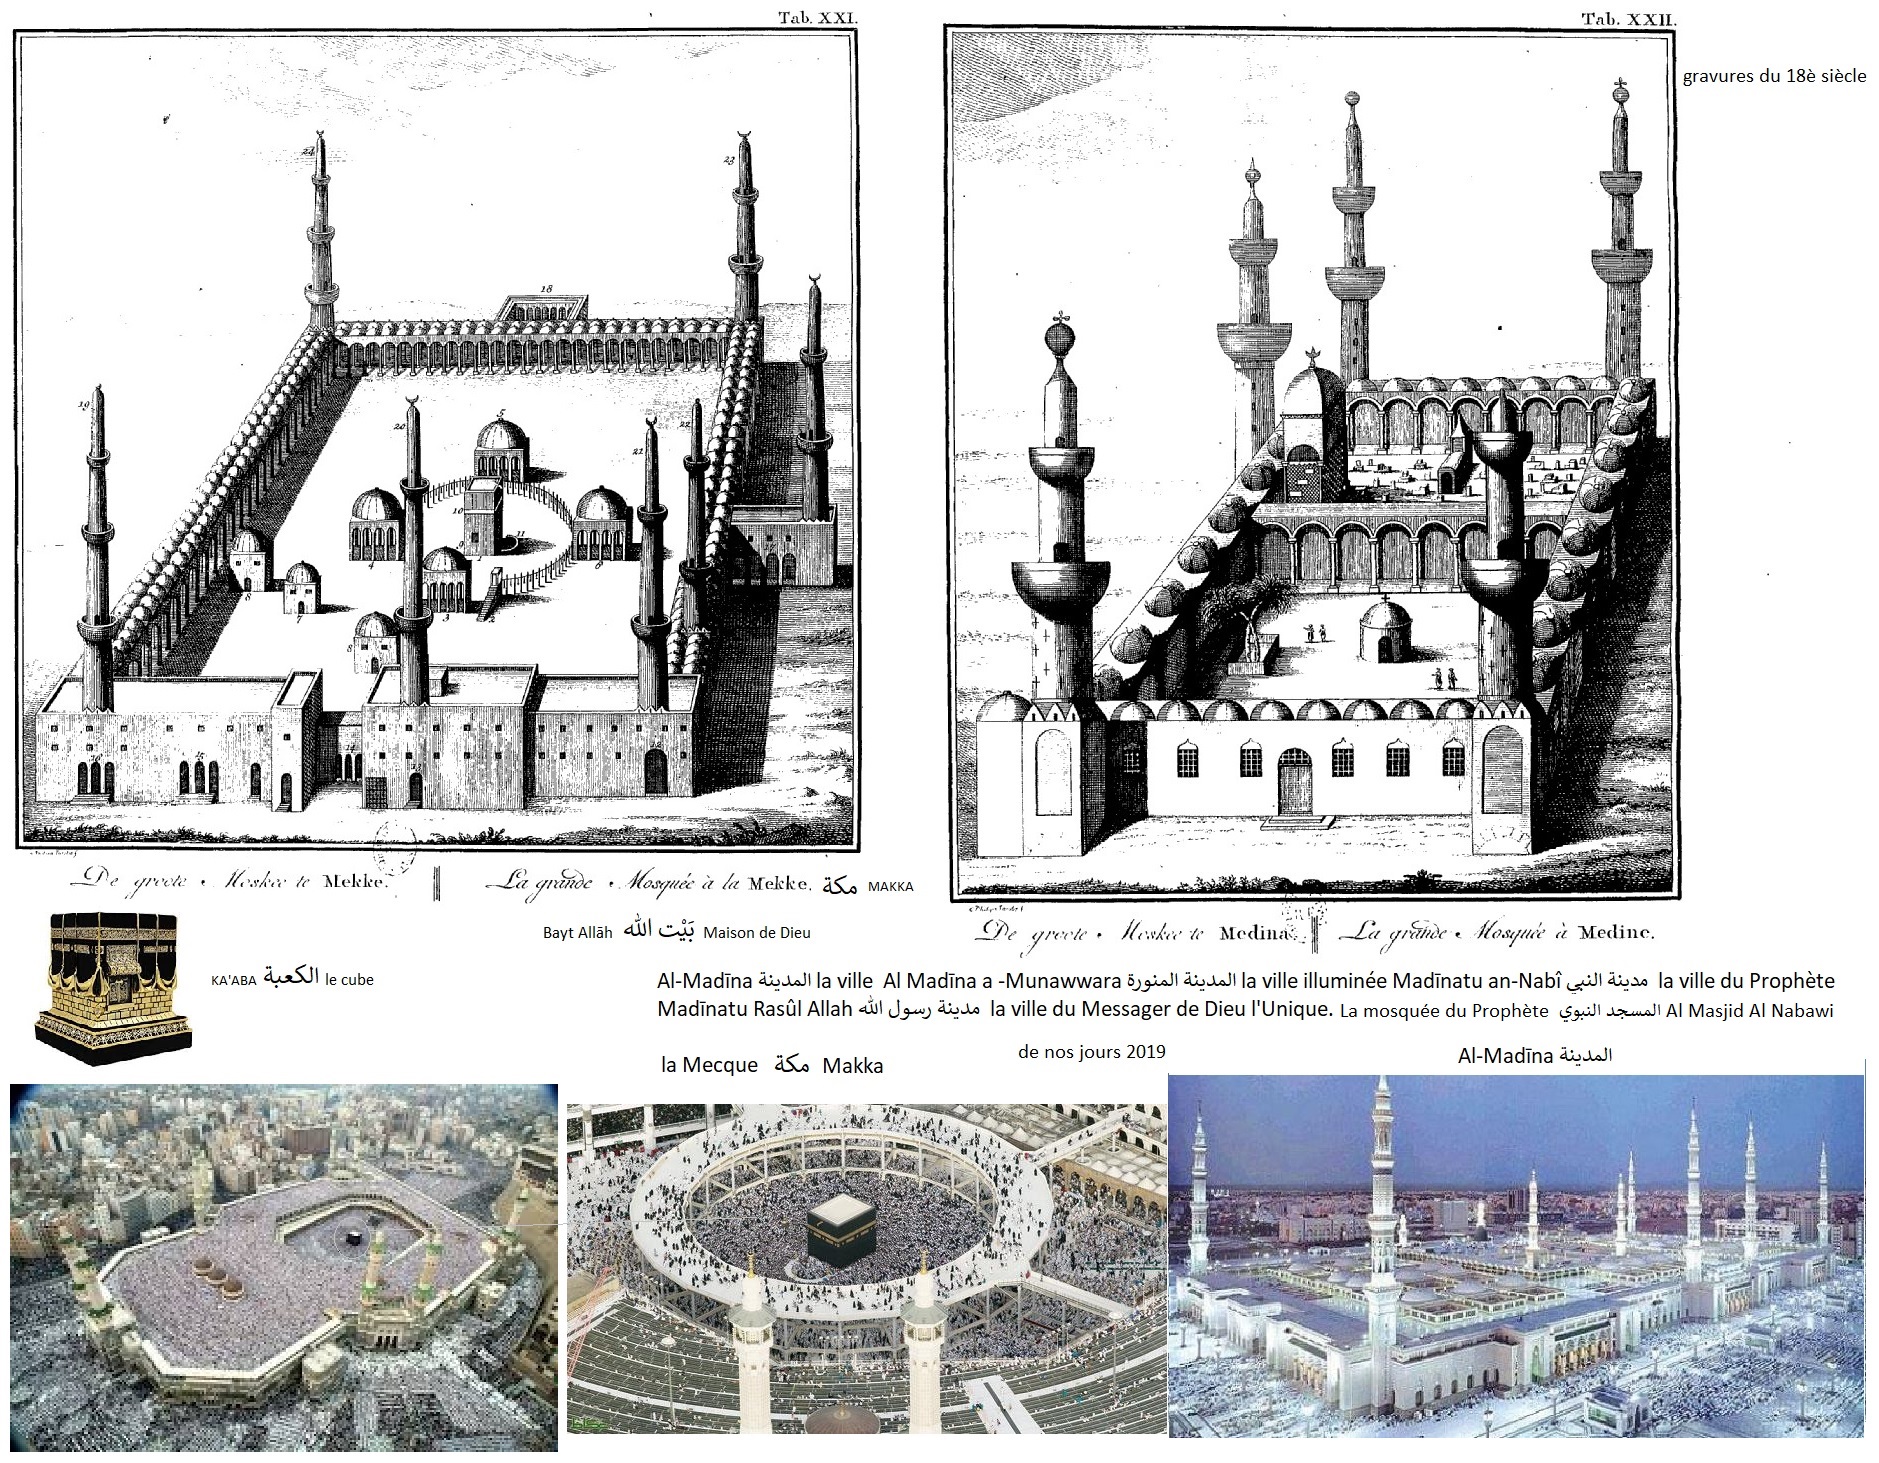 La mecque makka ka aba et medine al madina la mosquee du prophete al masjid al nabawi